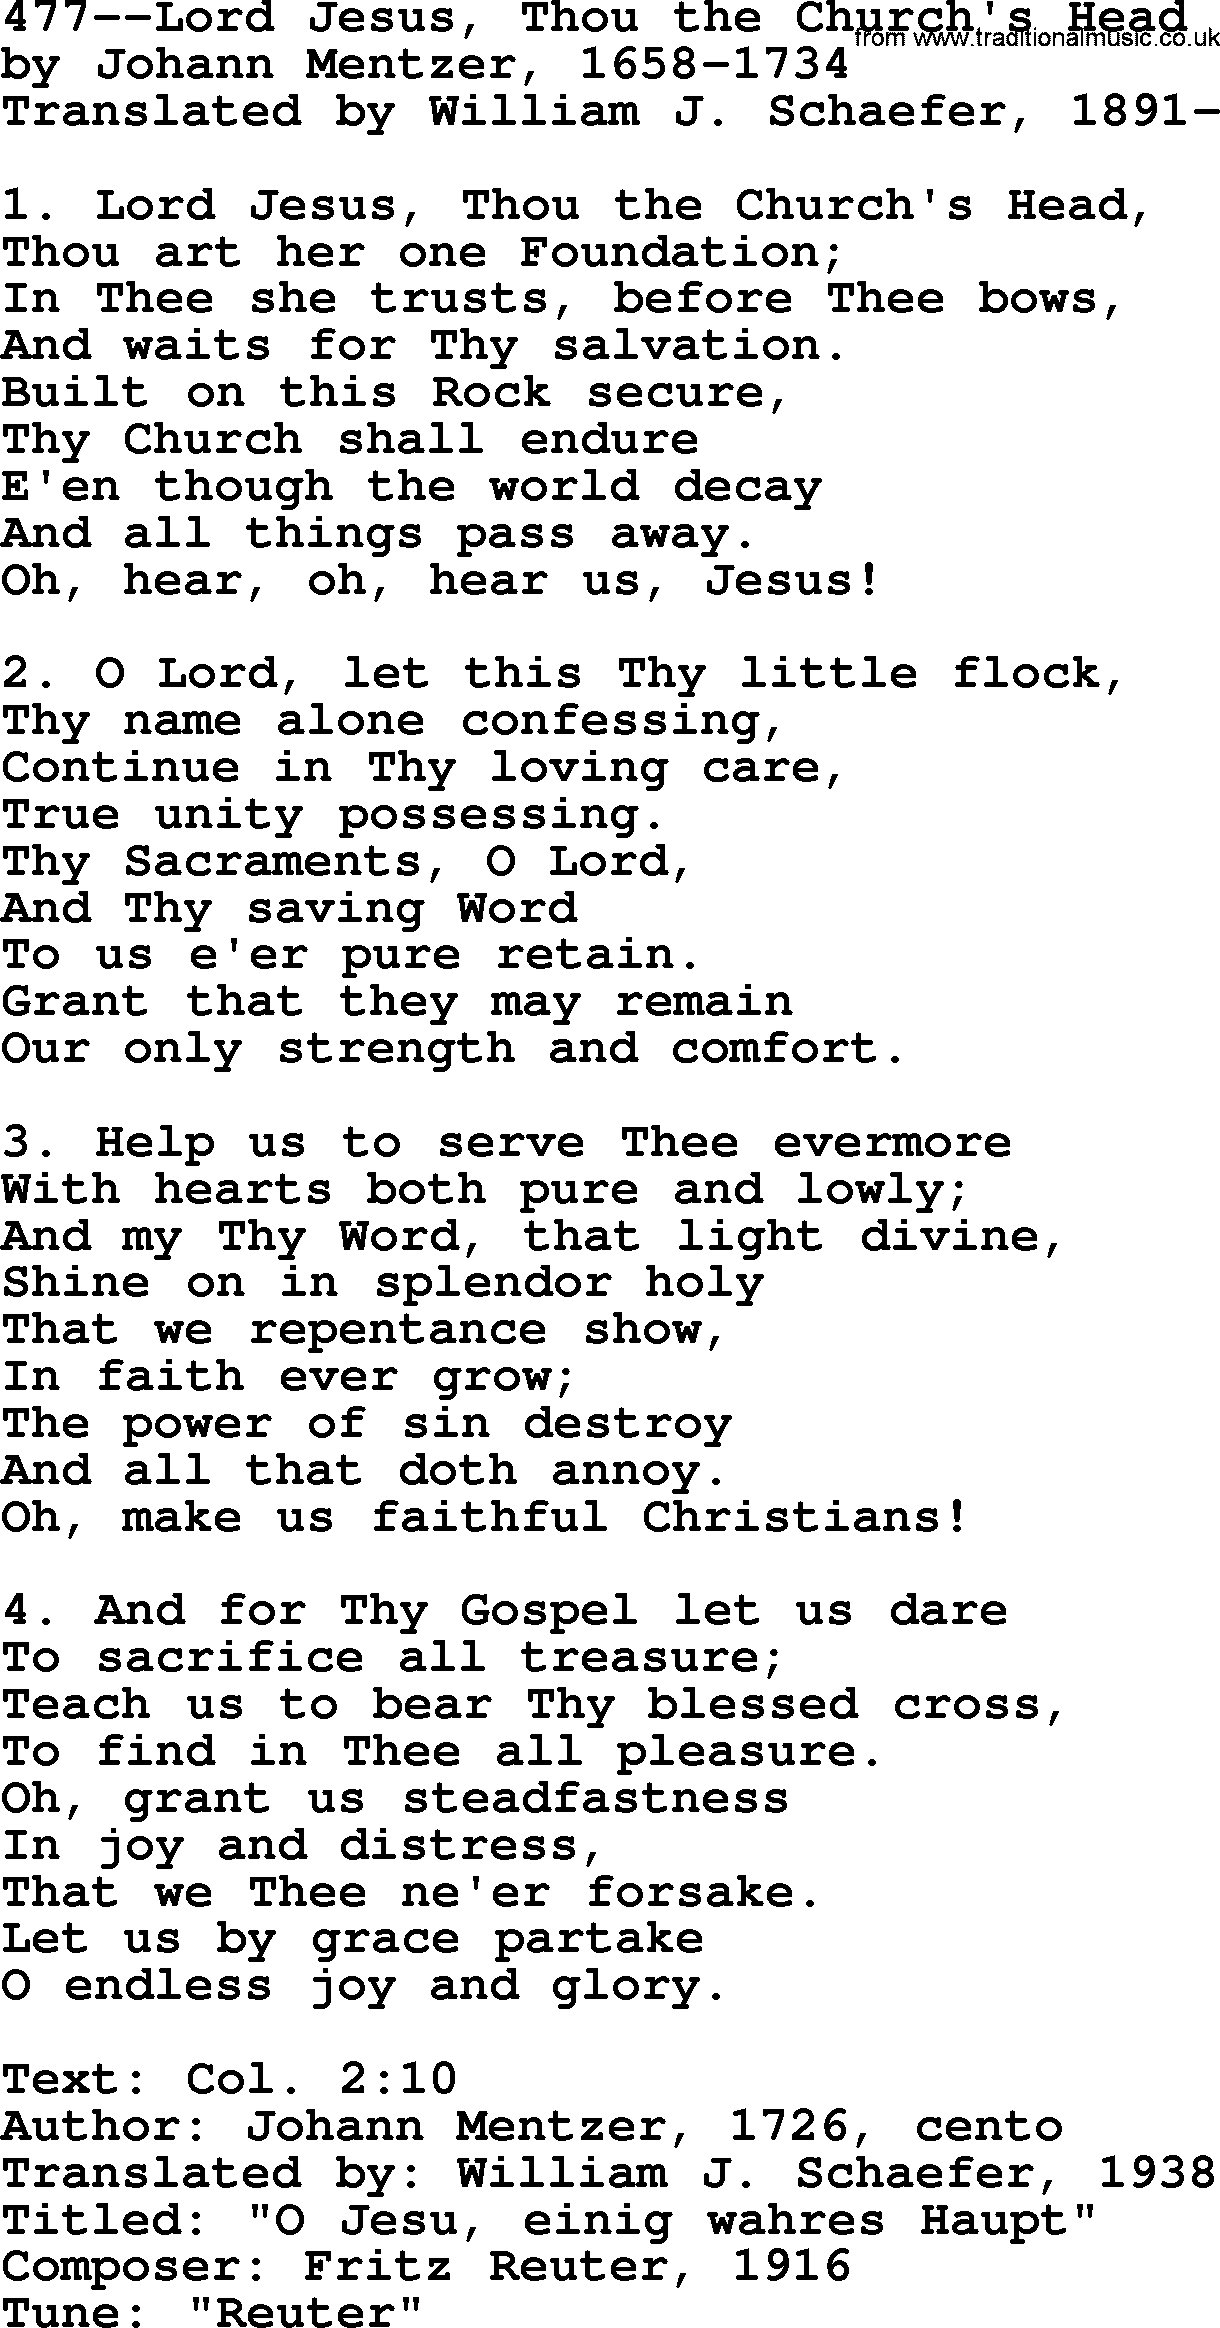 Lutheran Hymn: 477--Lord Jesus, Thou the Church's Head.txt lyrics with PDF